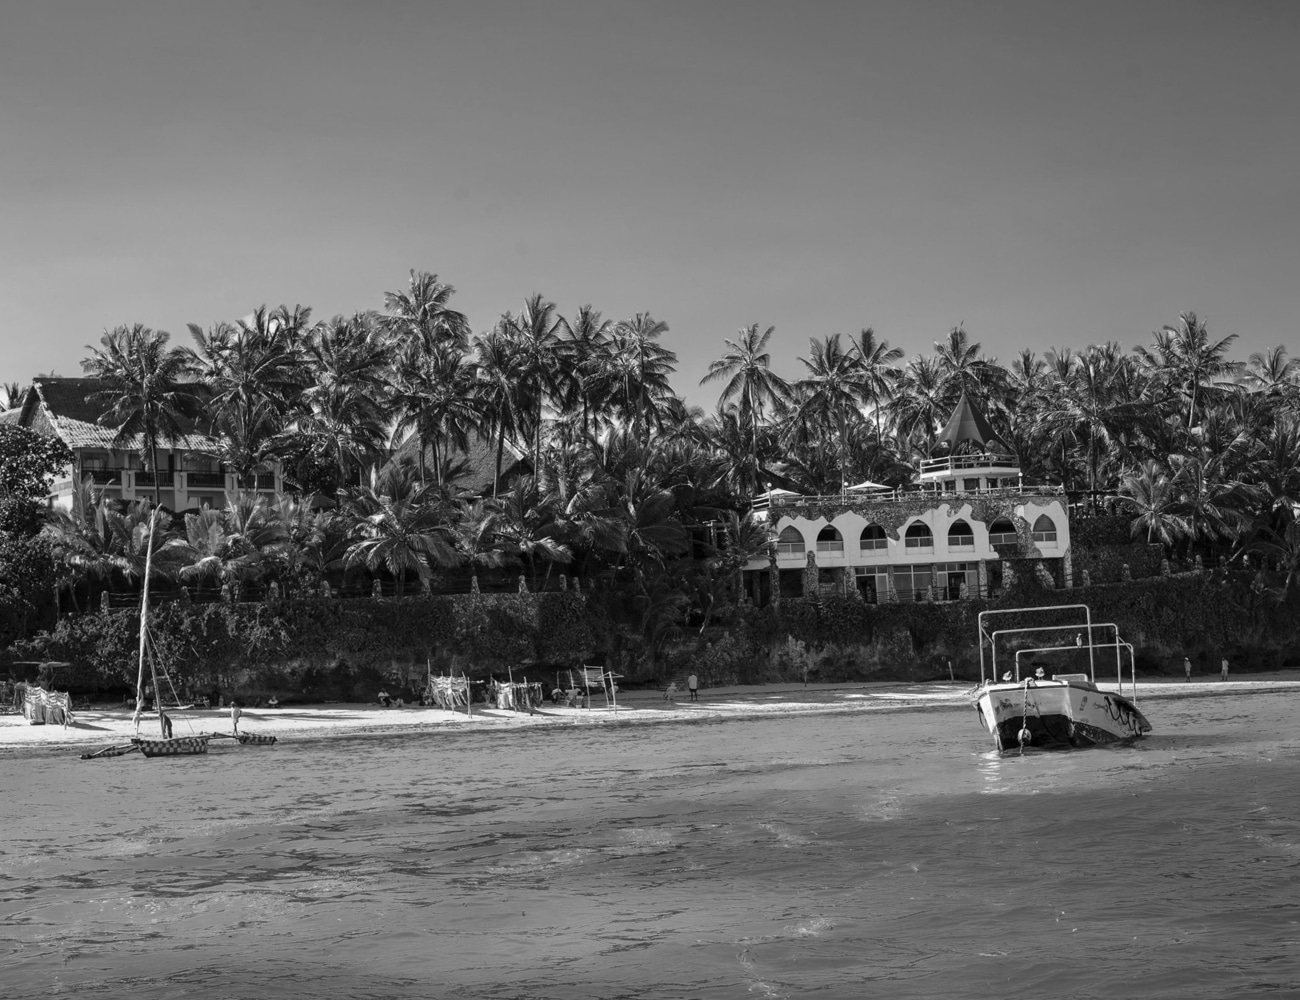 Bahari Beach in Dar es Salaam